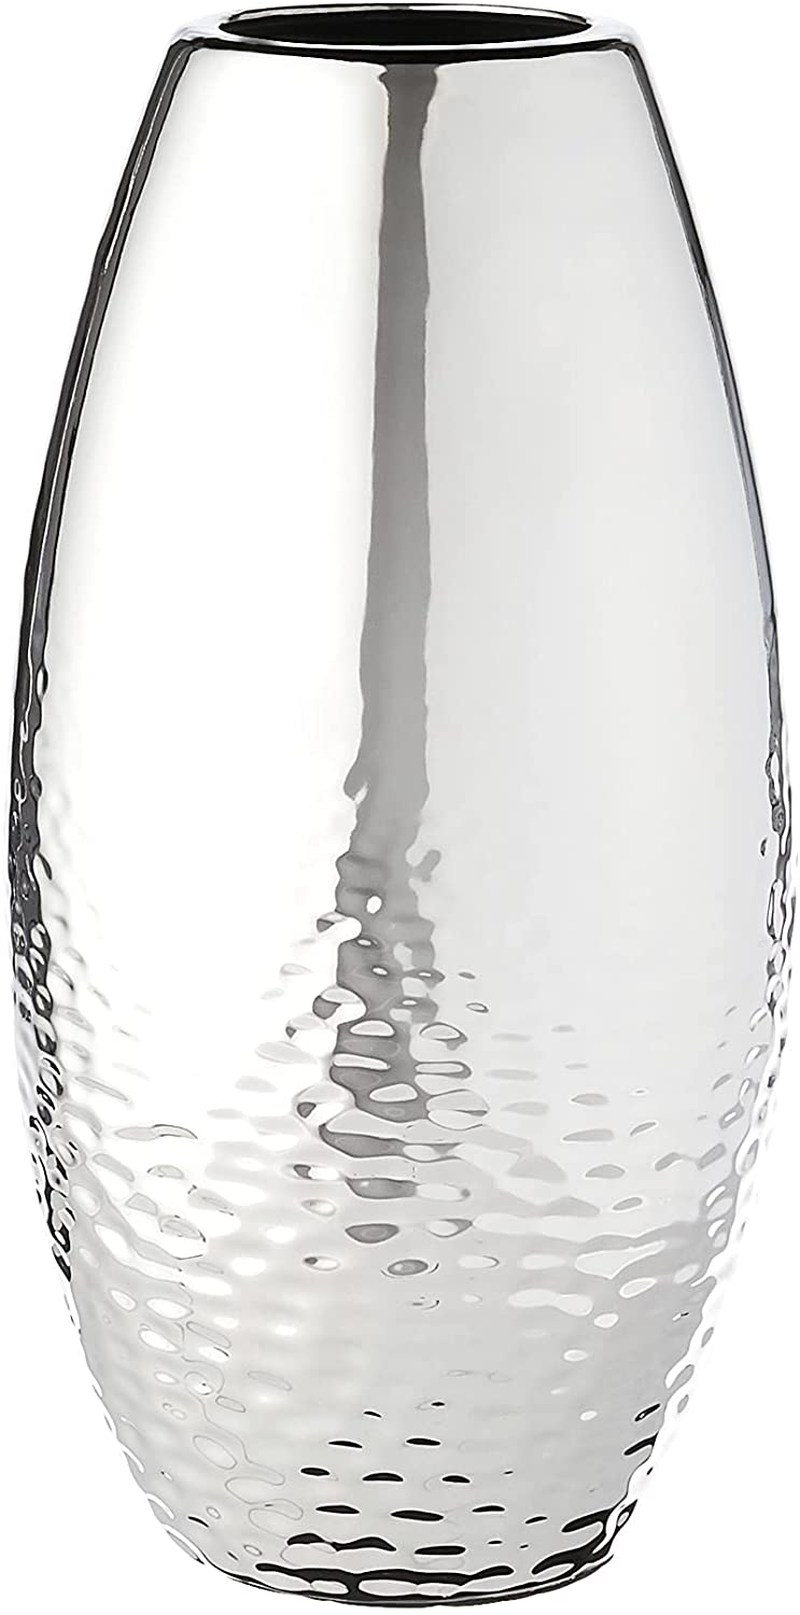 Signature Design by Ashley Dinesh Modern Glam 2 Piece Decorative Vase Set, Silver Finish